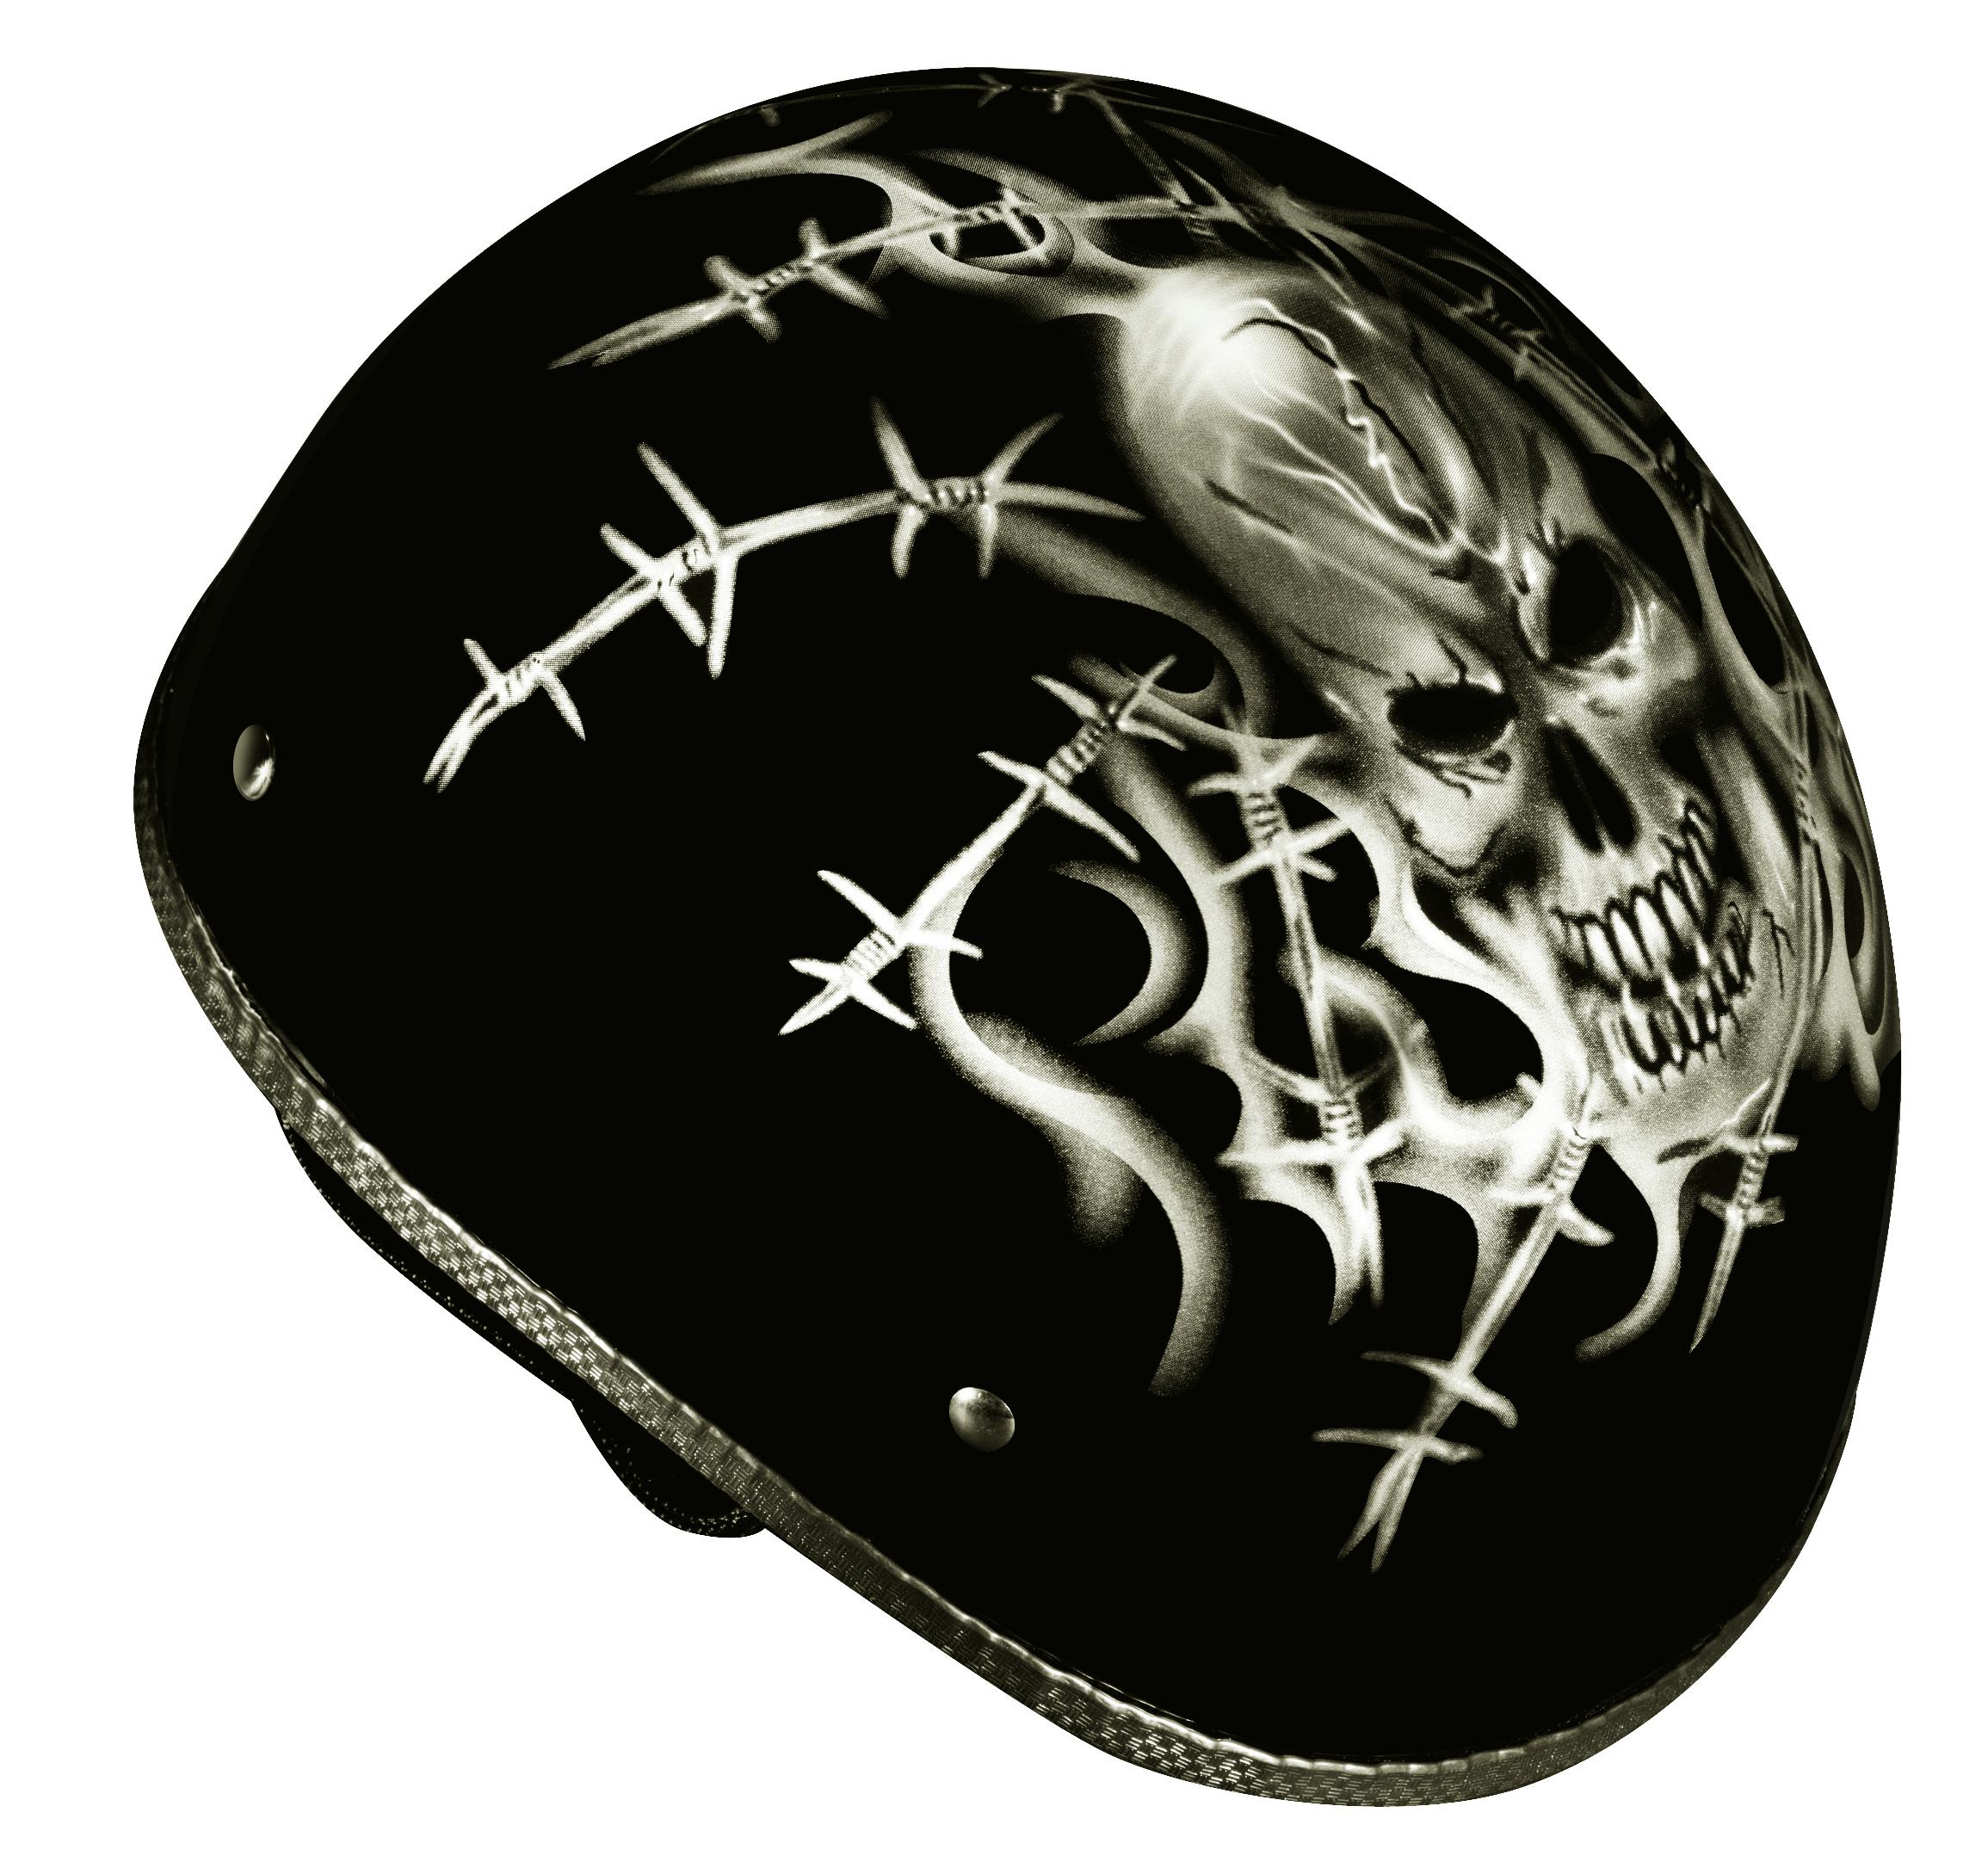 New vega xts naked barbed wire skull adult half-helmet, black, large/lg